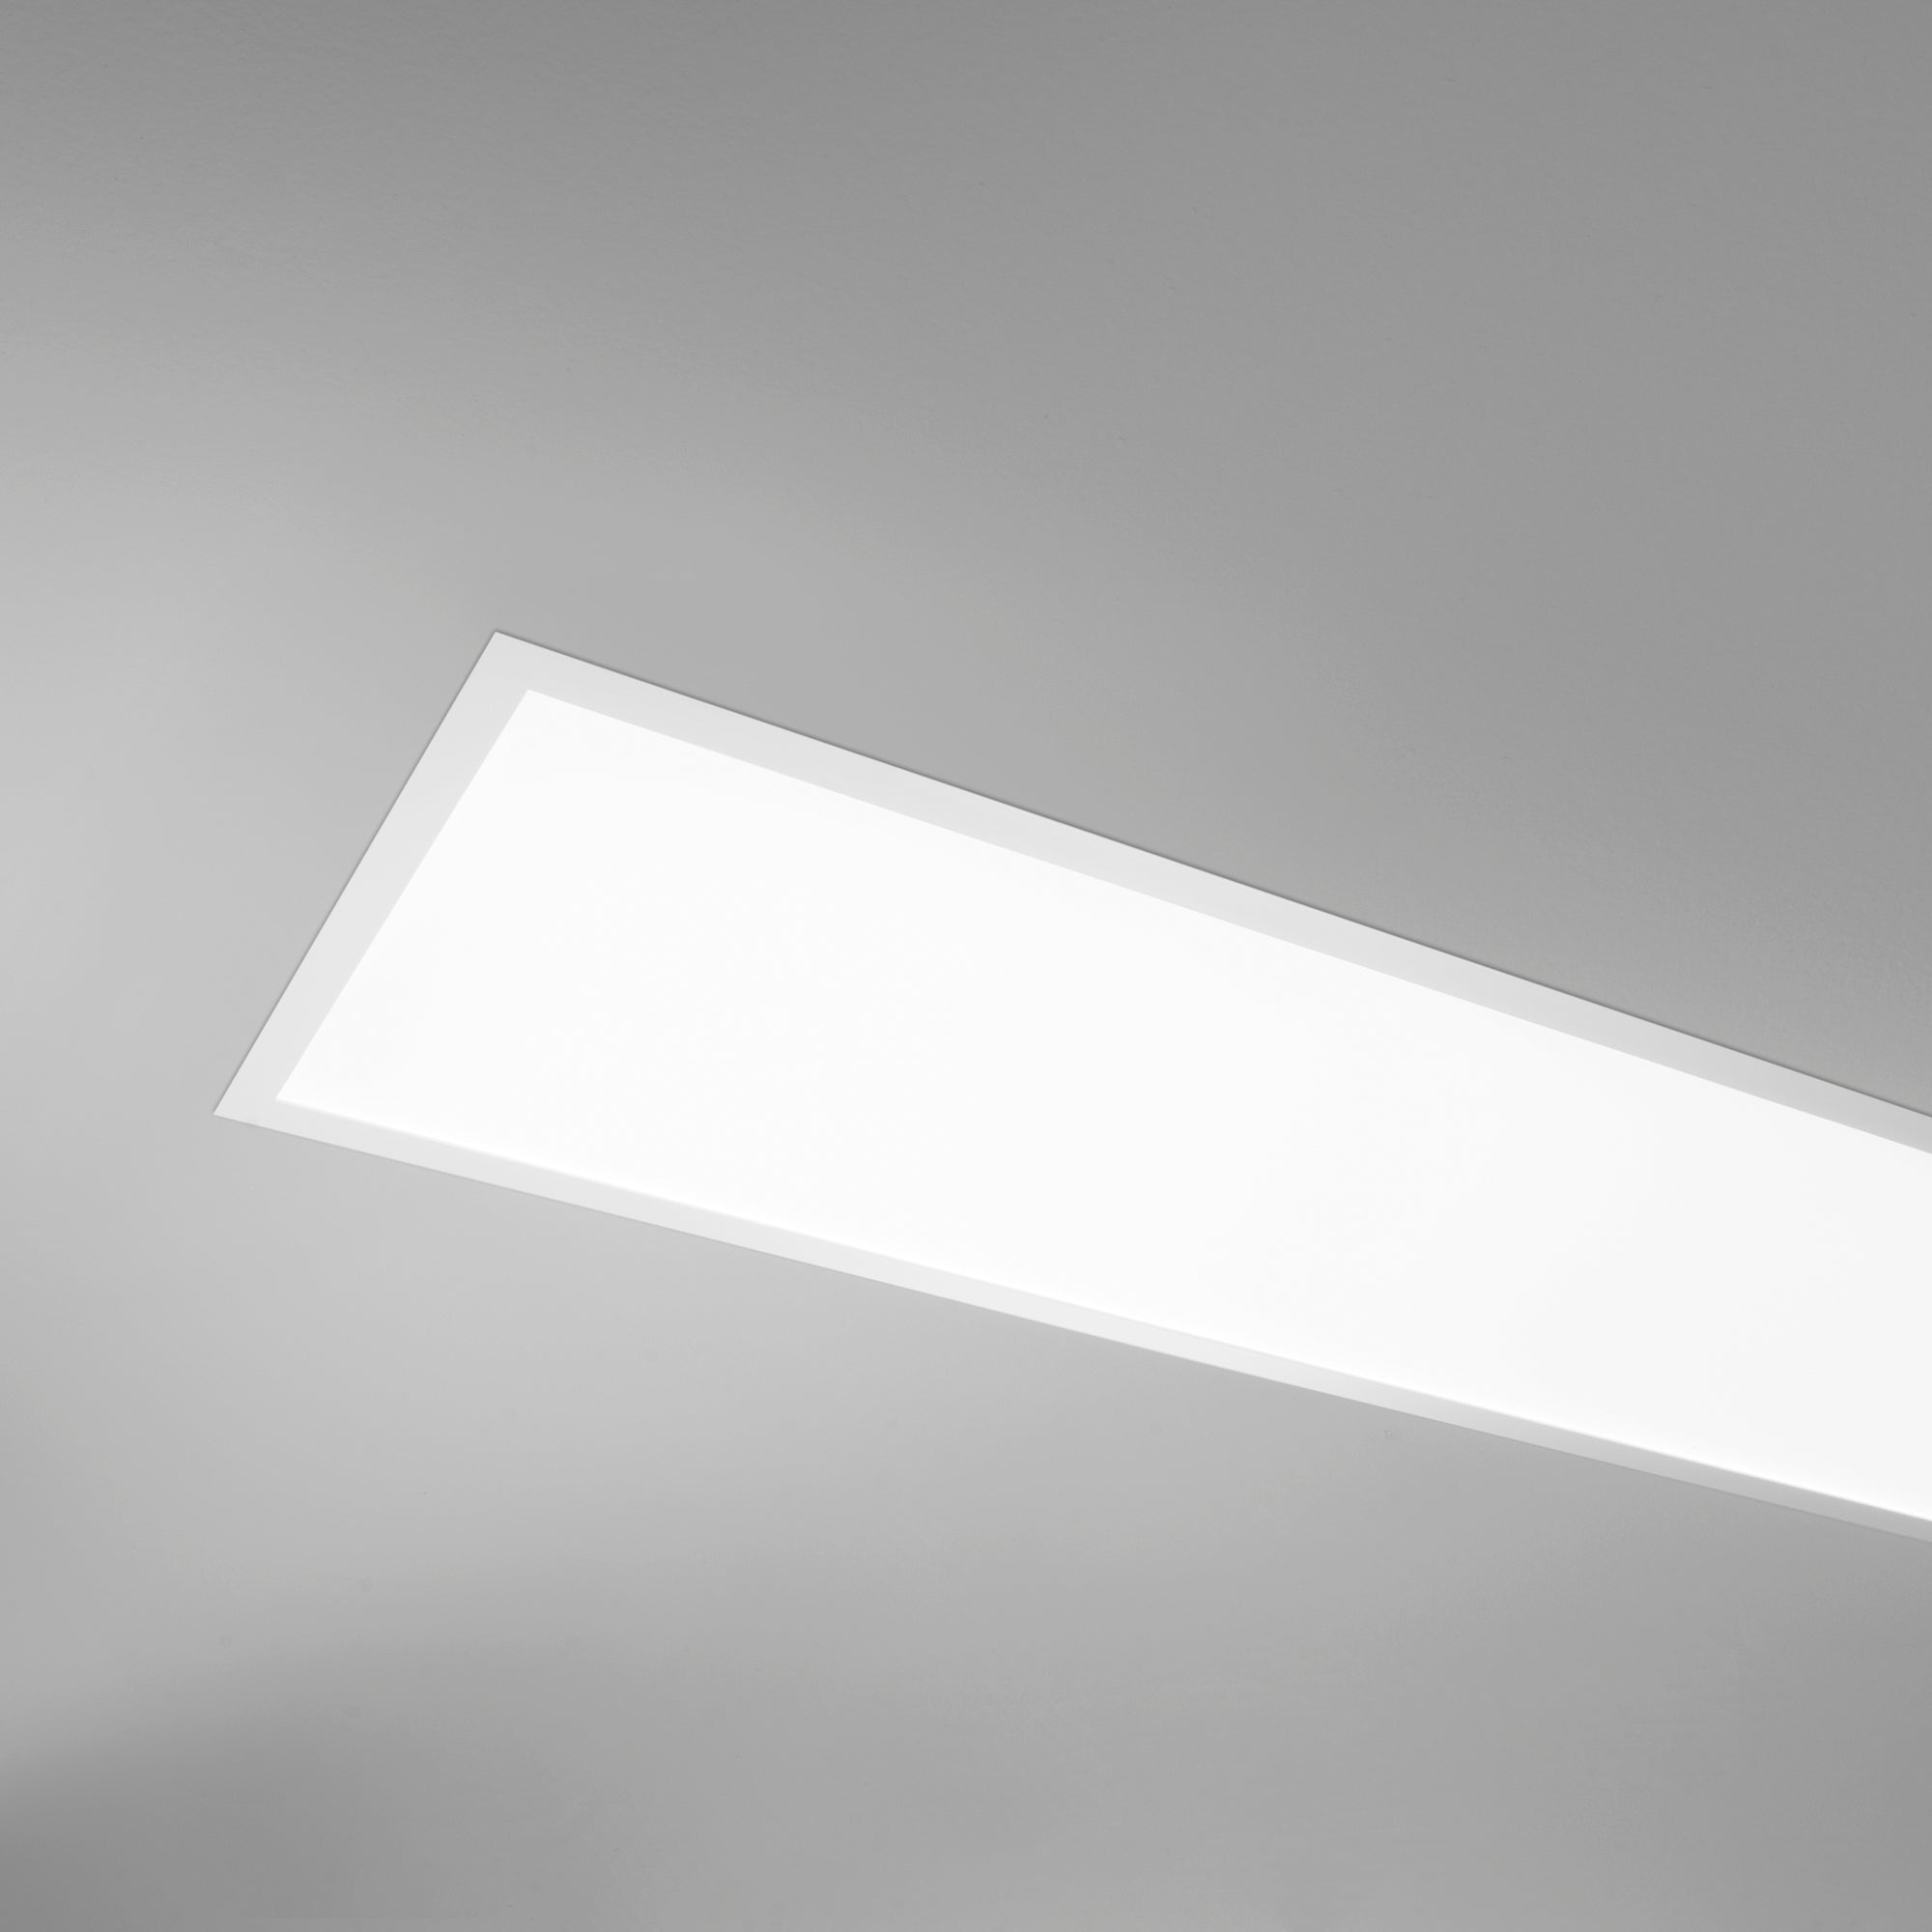 Panel LED de 40W en aluminio blanco con UGR&lt;19 